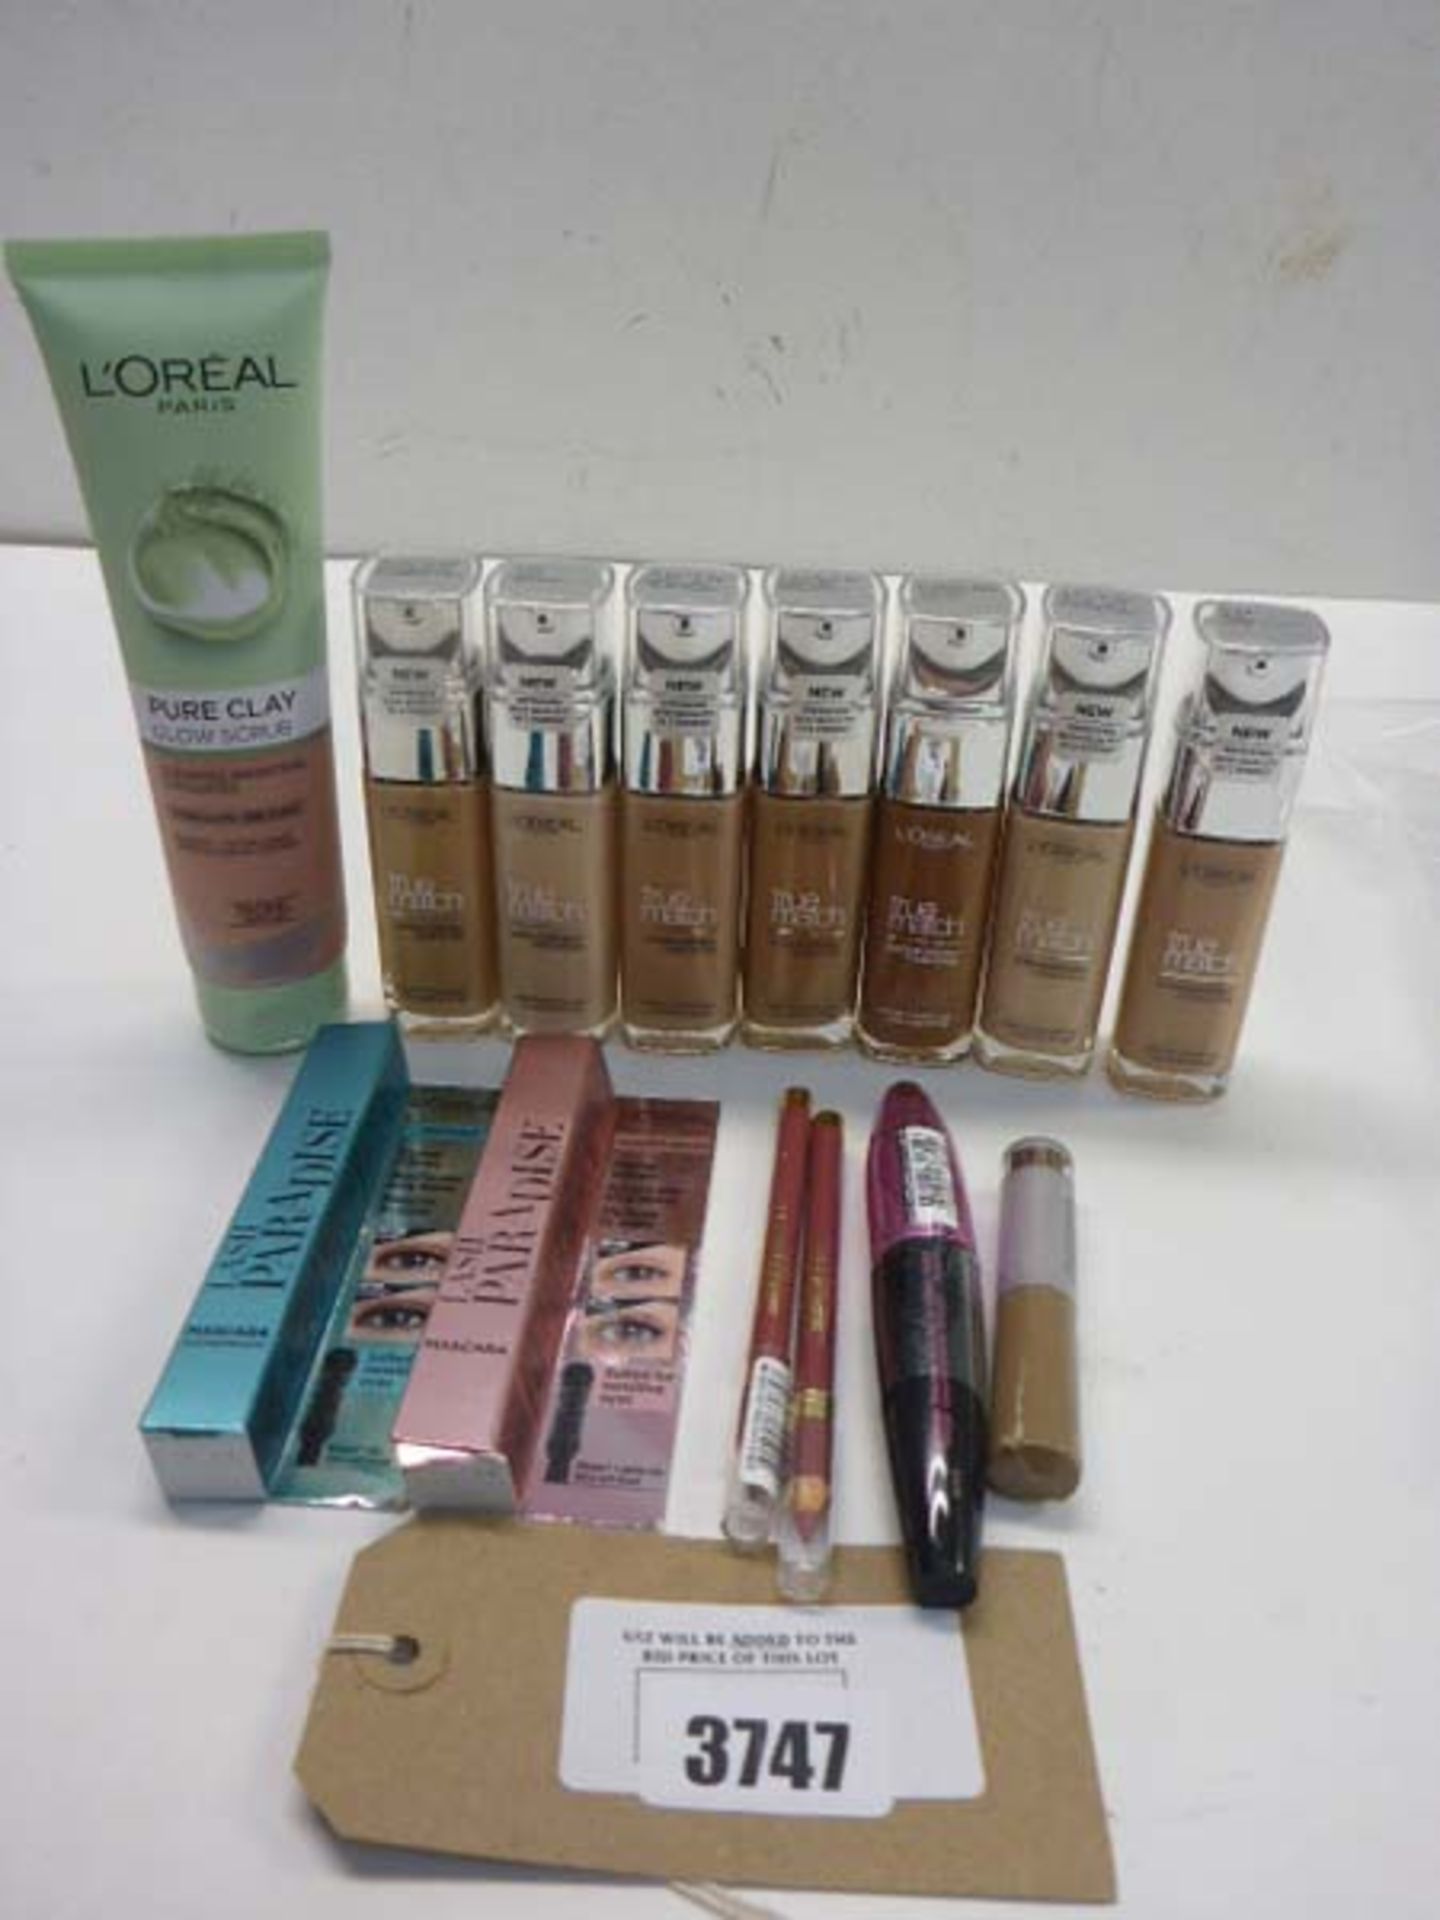 L'Oreal beauty products including foundation, mascara, glow scrub etc